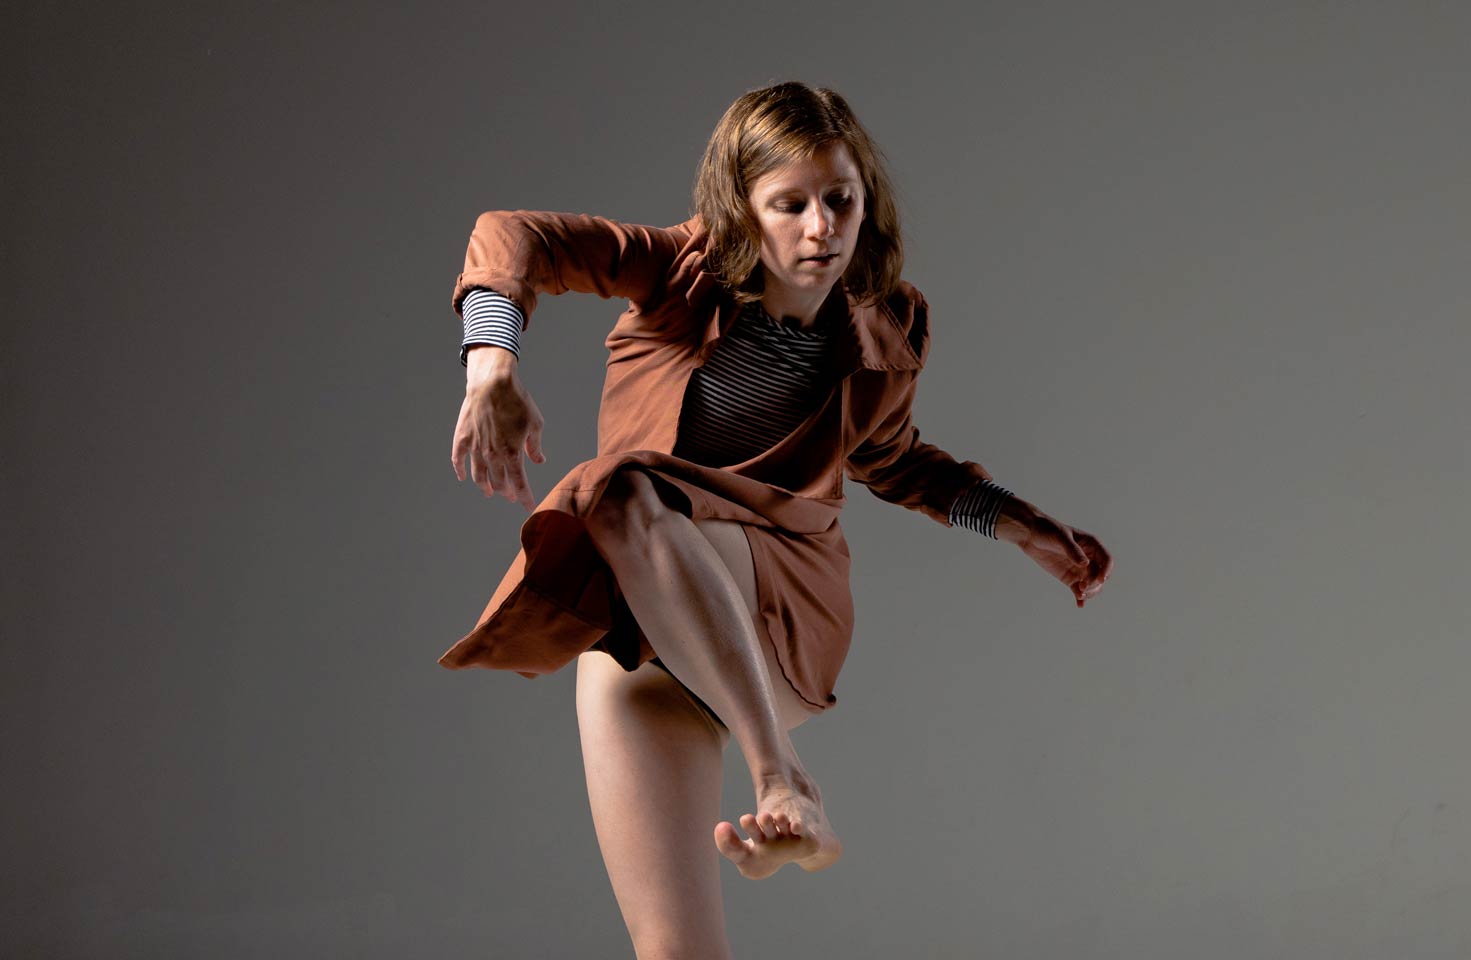 push/FOLD dancer Briley Jozwiak lifts up a gestural leg in an orange jacket at Cobalt Studios in Portland, Oregon | Photography: Jingzi Zhao